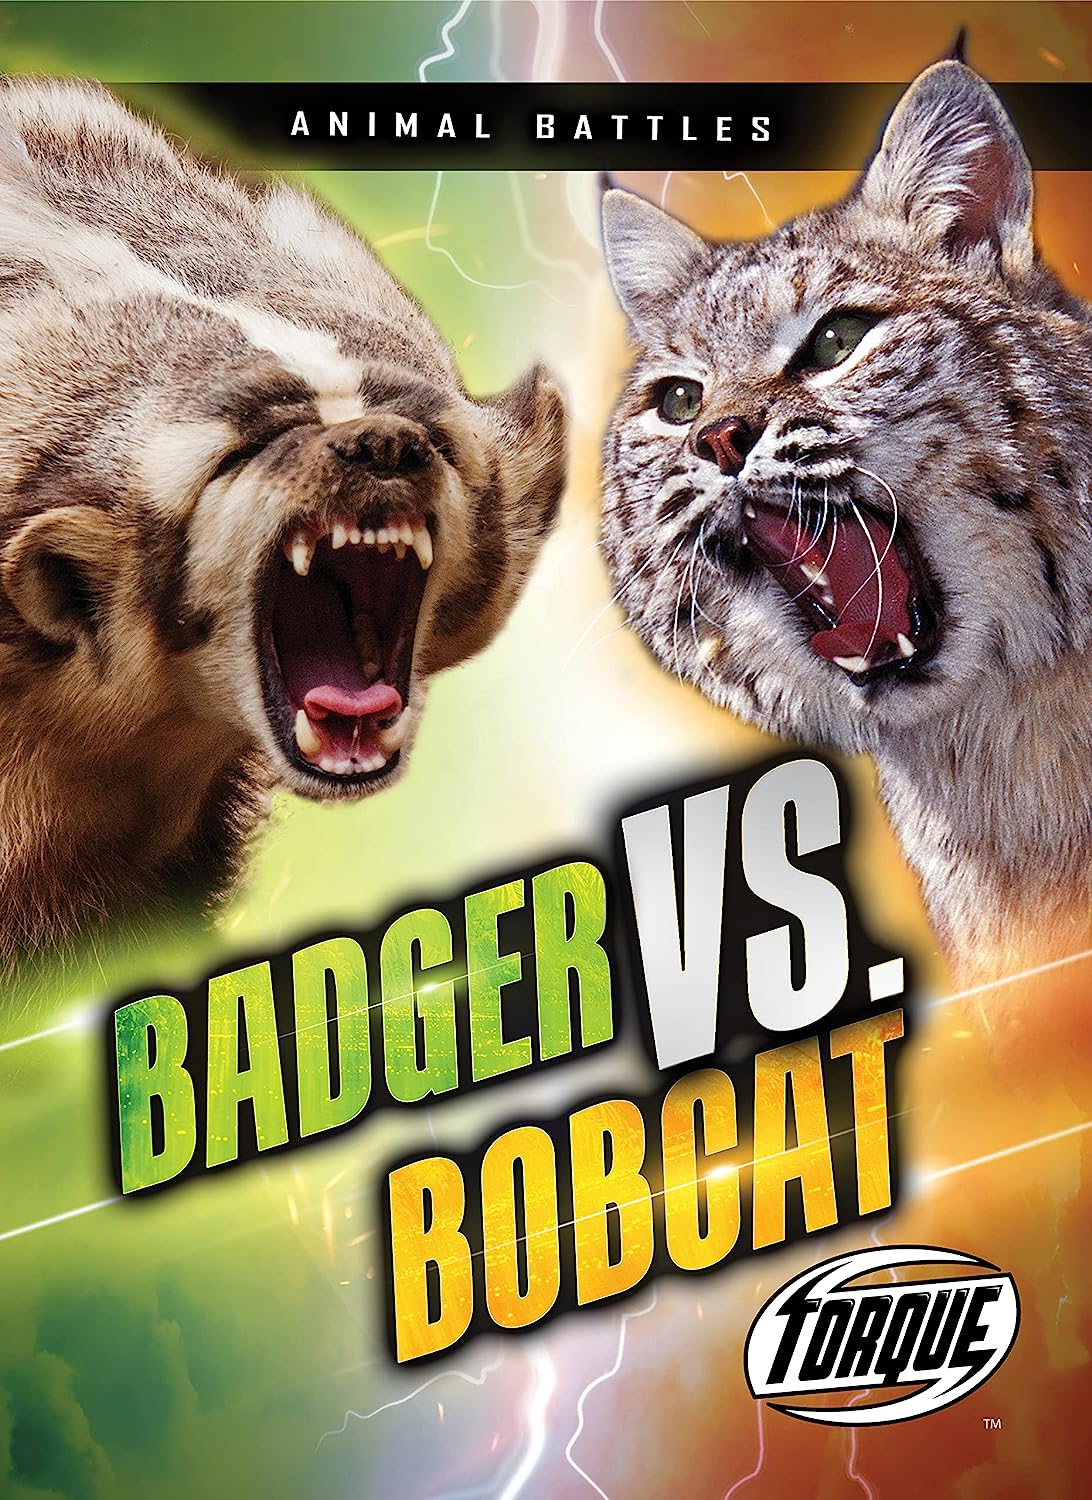 Image of book cover Badger vs Bobcat.